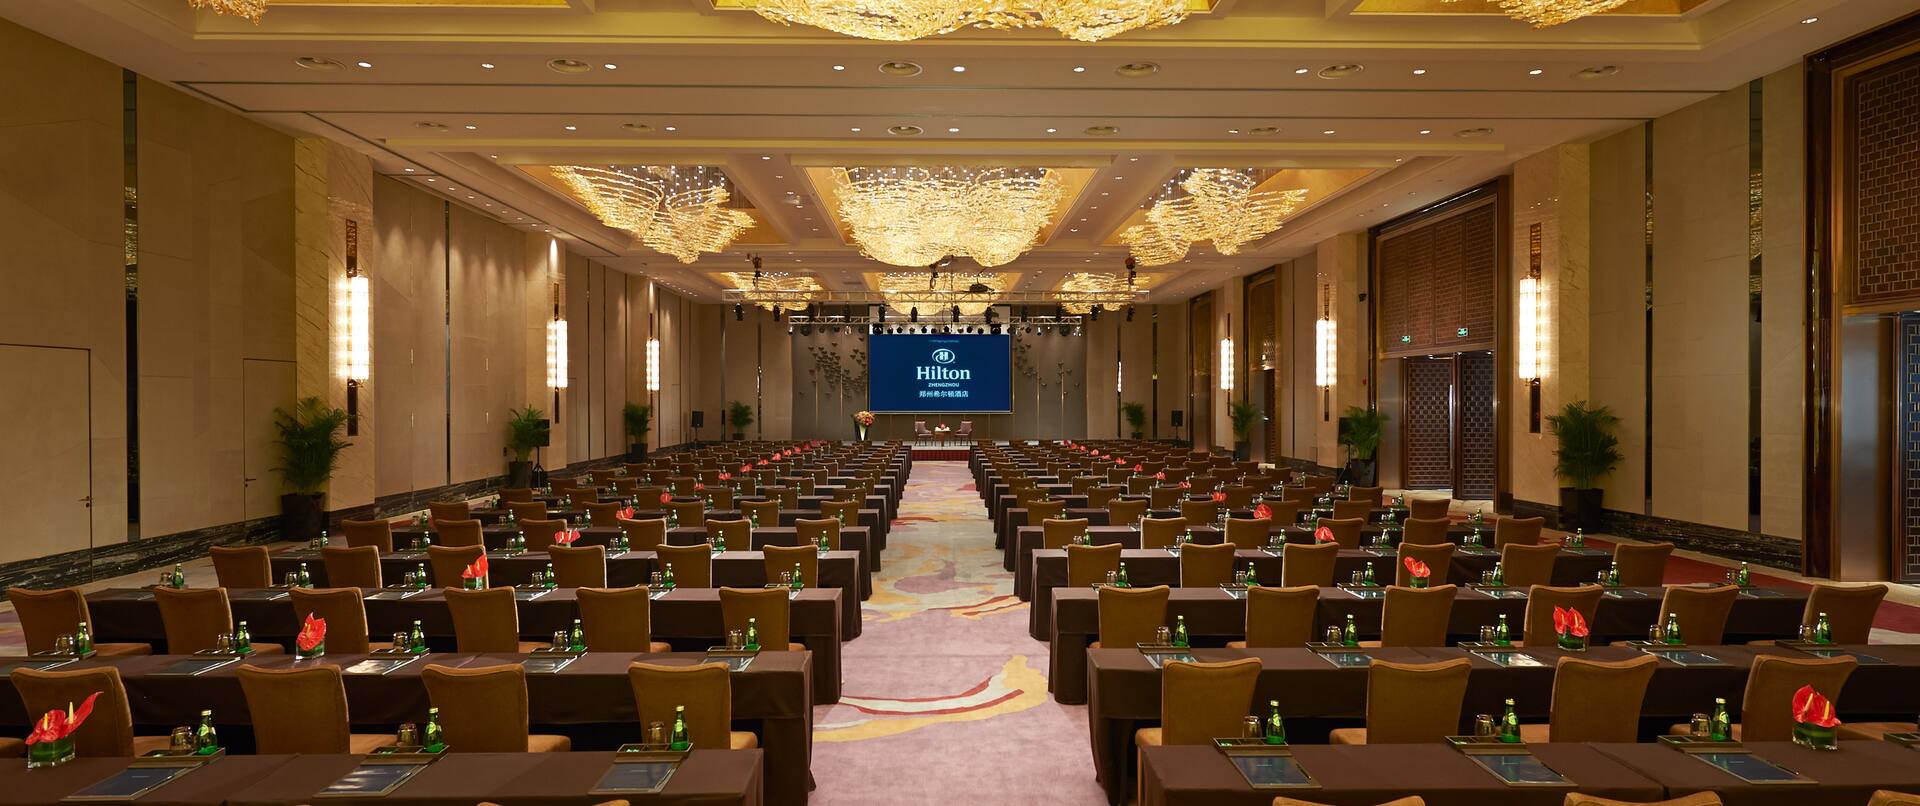 Hilton Zhengzhou Hotel, China - Grand Ballroom Classroom-Style Set Up